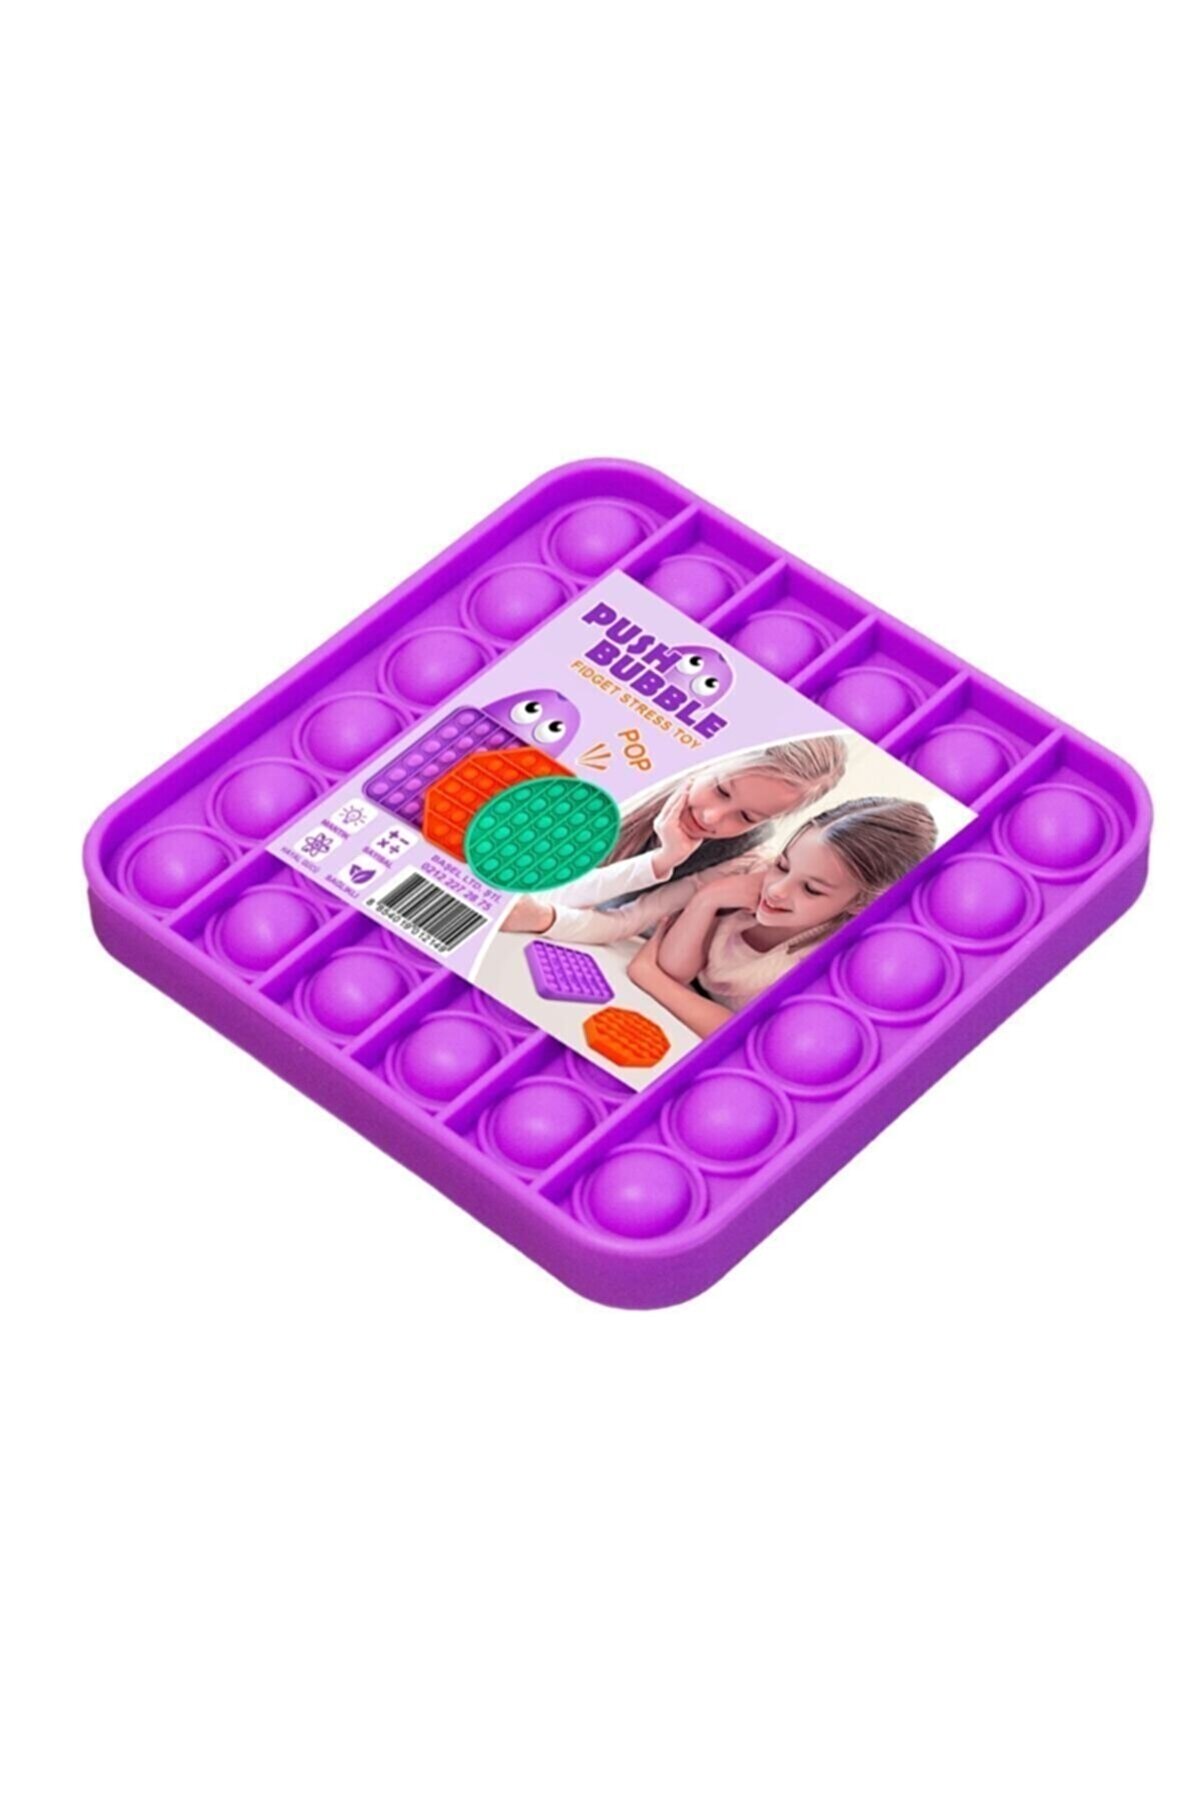 Başel Toys Push Bubble Fidget Özel Pop Duyusal Oyuncak Zihinsel Stres ( Mor Renk, Kare)